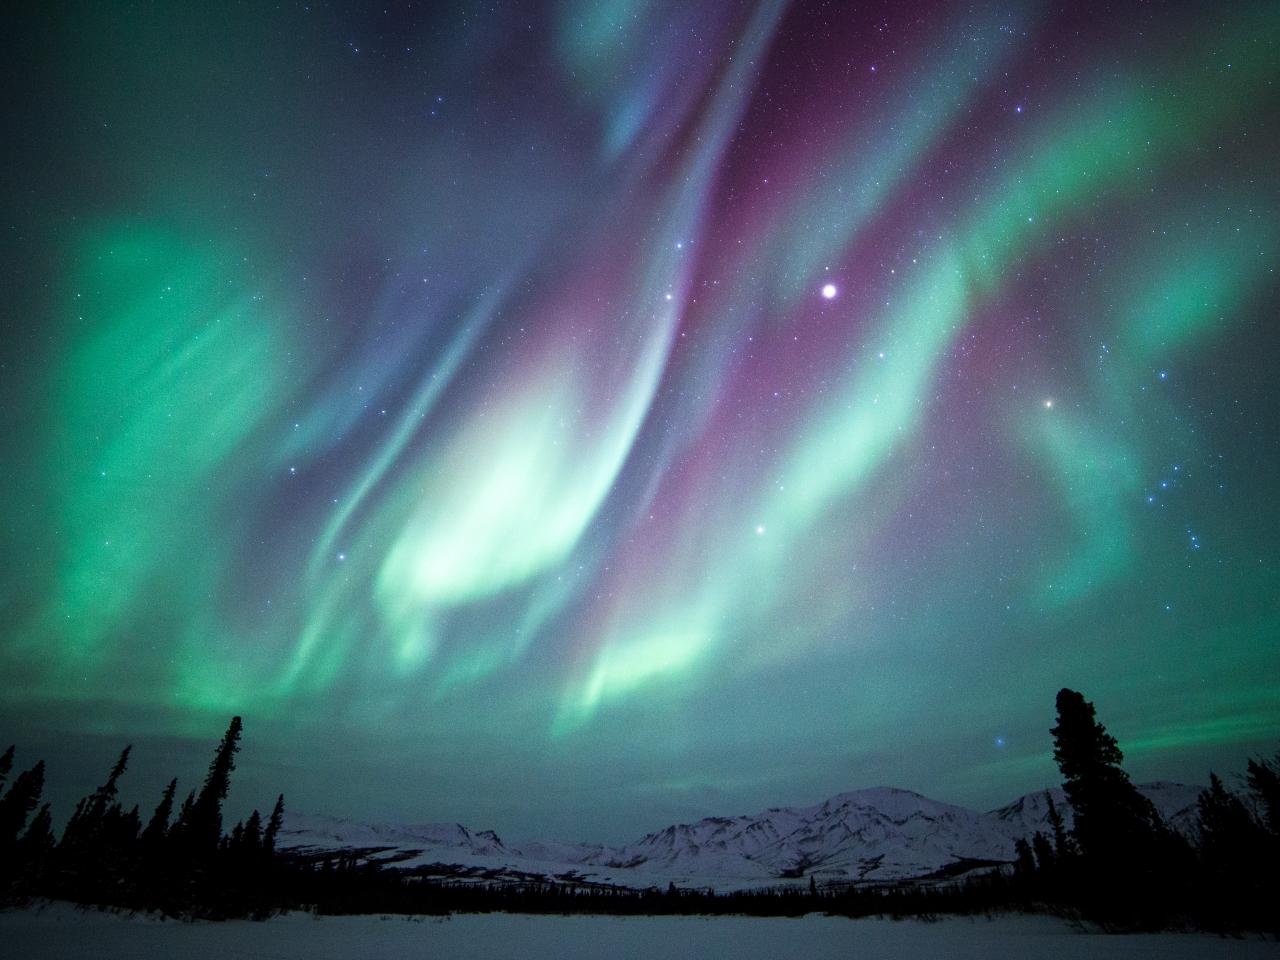 Twilight In Alaska on 03-27-2014 - Galactic Images